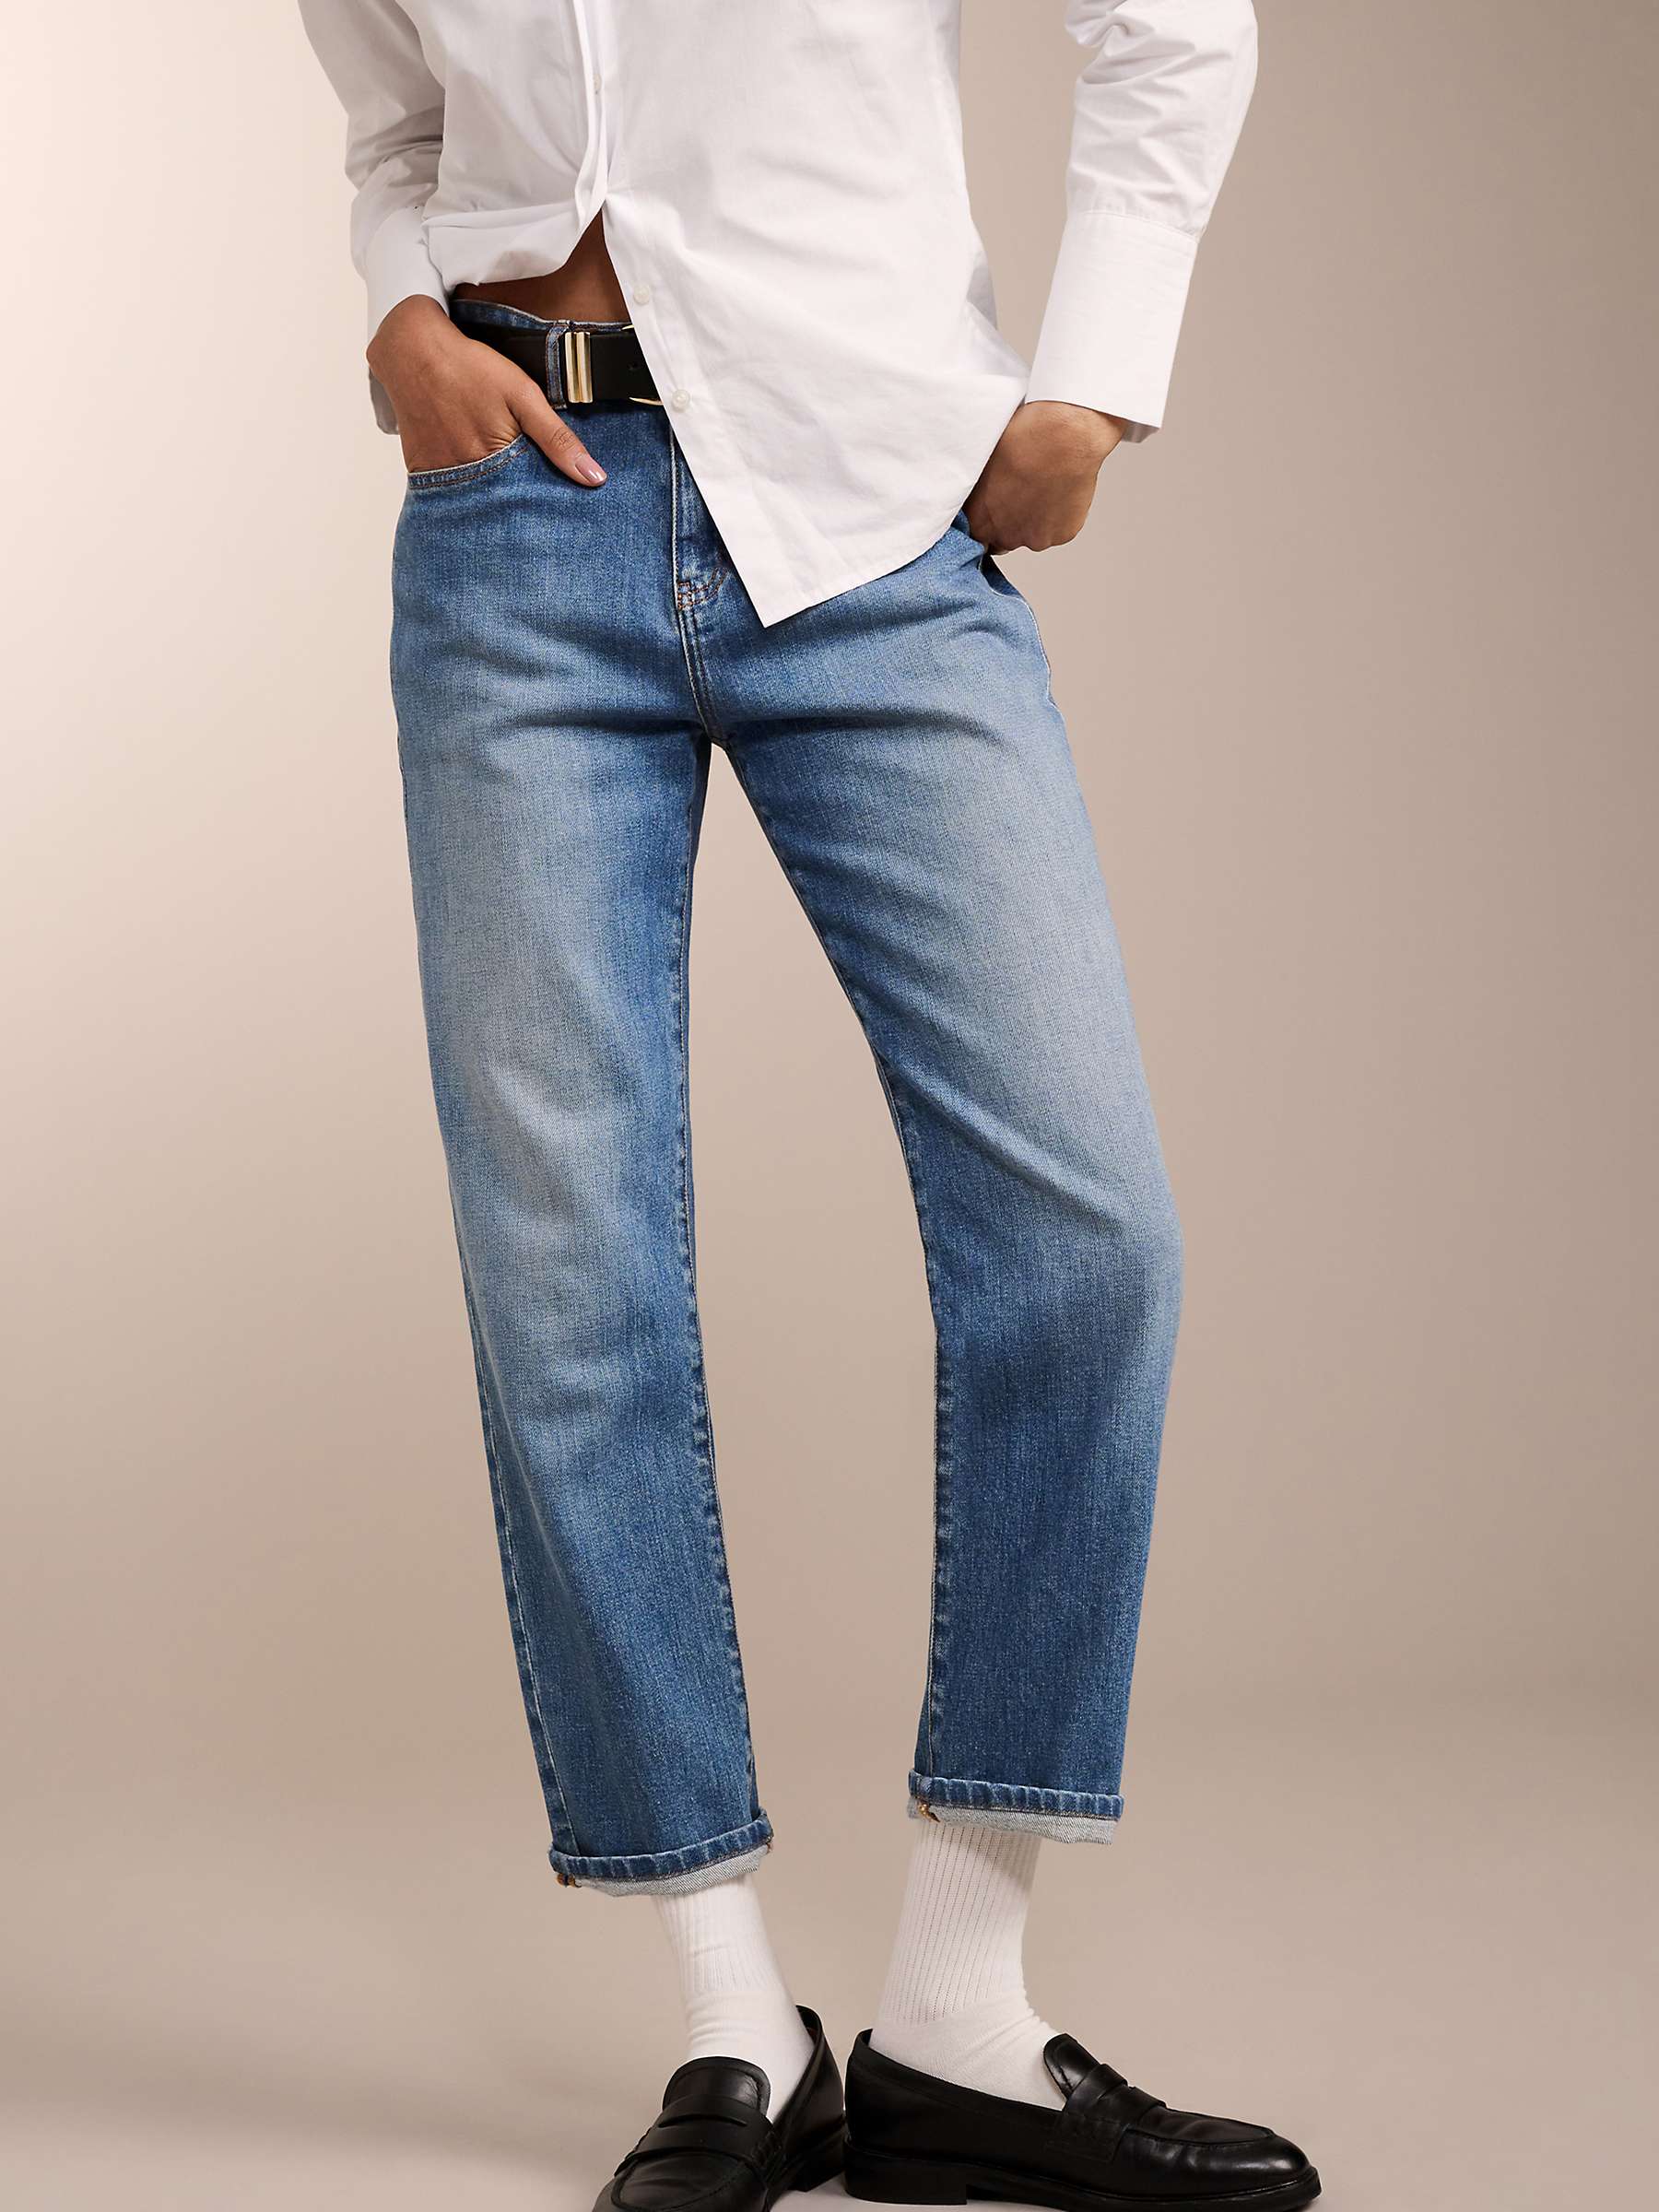 Buy Baukjen The Boyfriend Organic Cotton Jeans, Washed Indigo Online at johnlewis.com